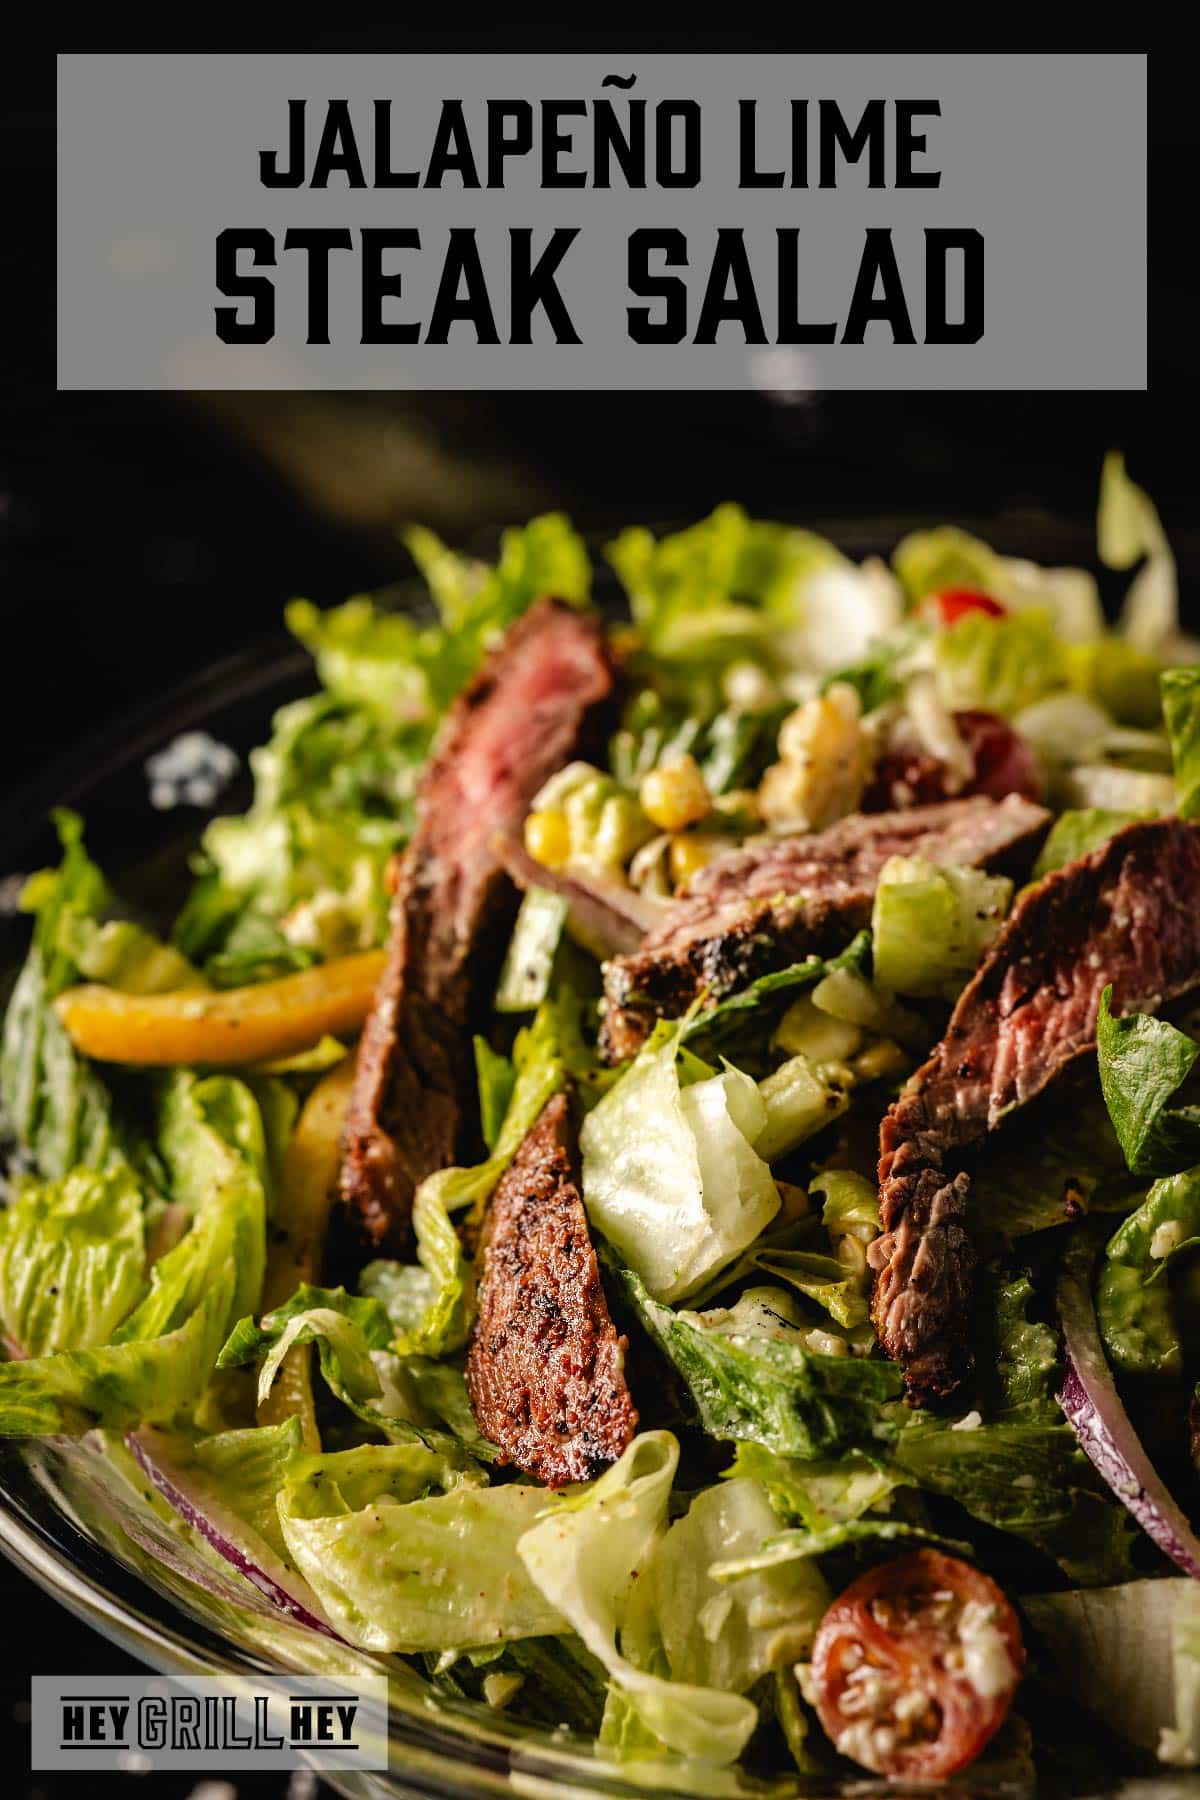 Steak salad in bowl. Text reads "Jalapeño Lime Steak Salad".